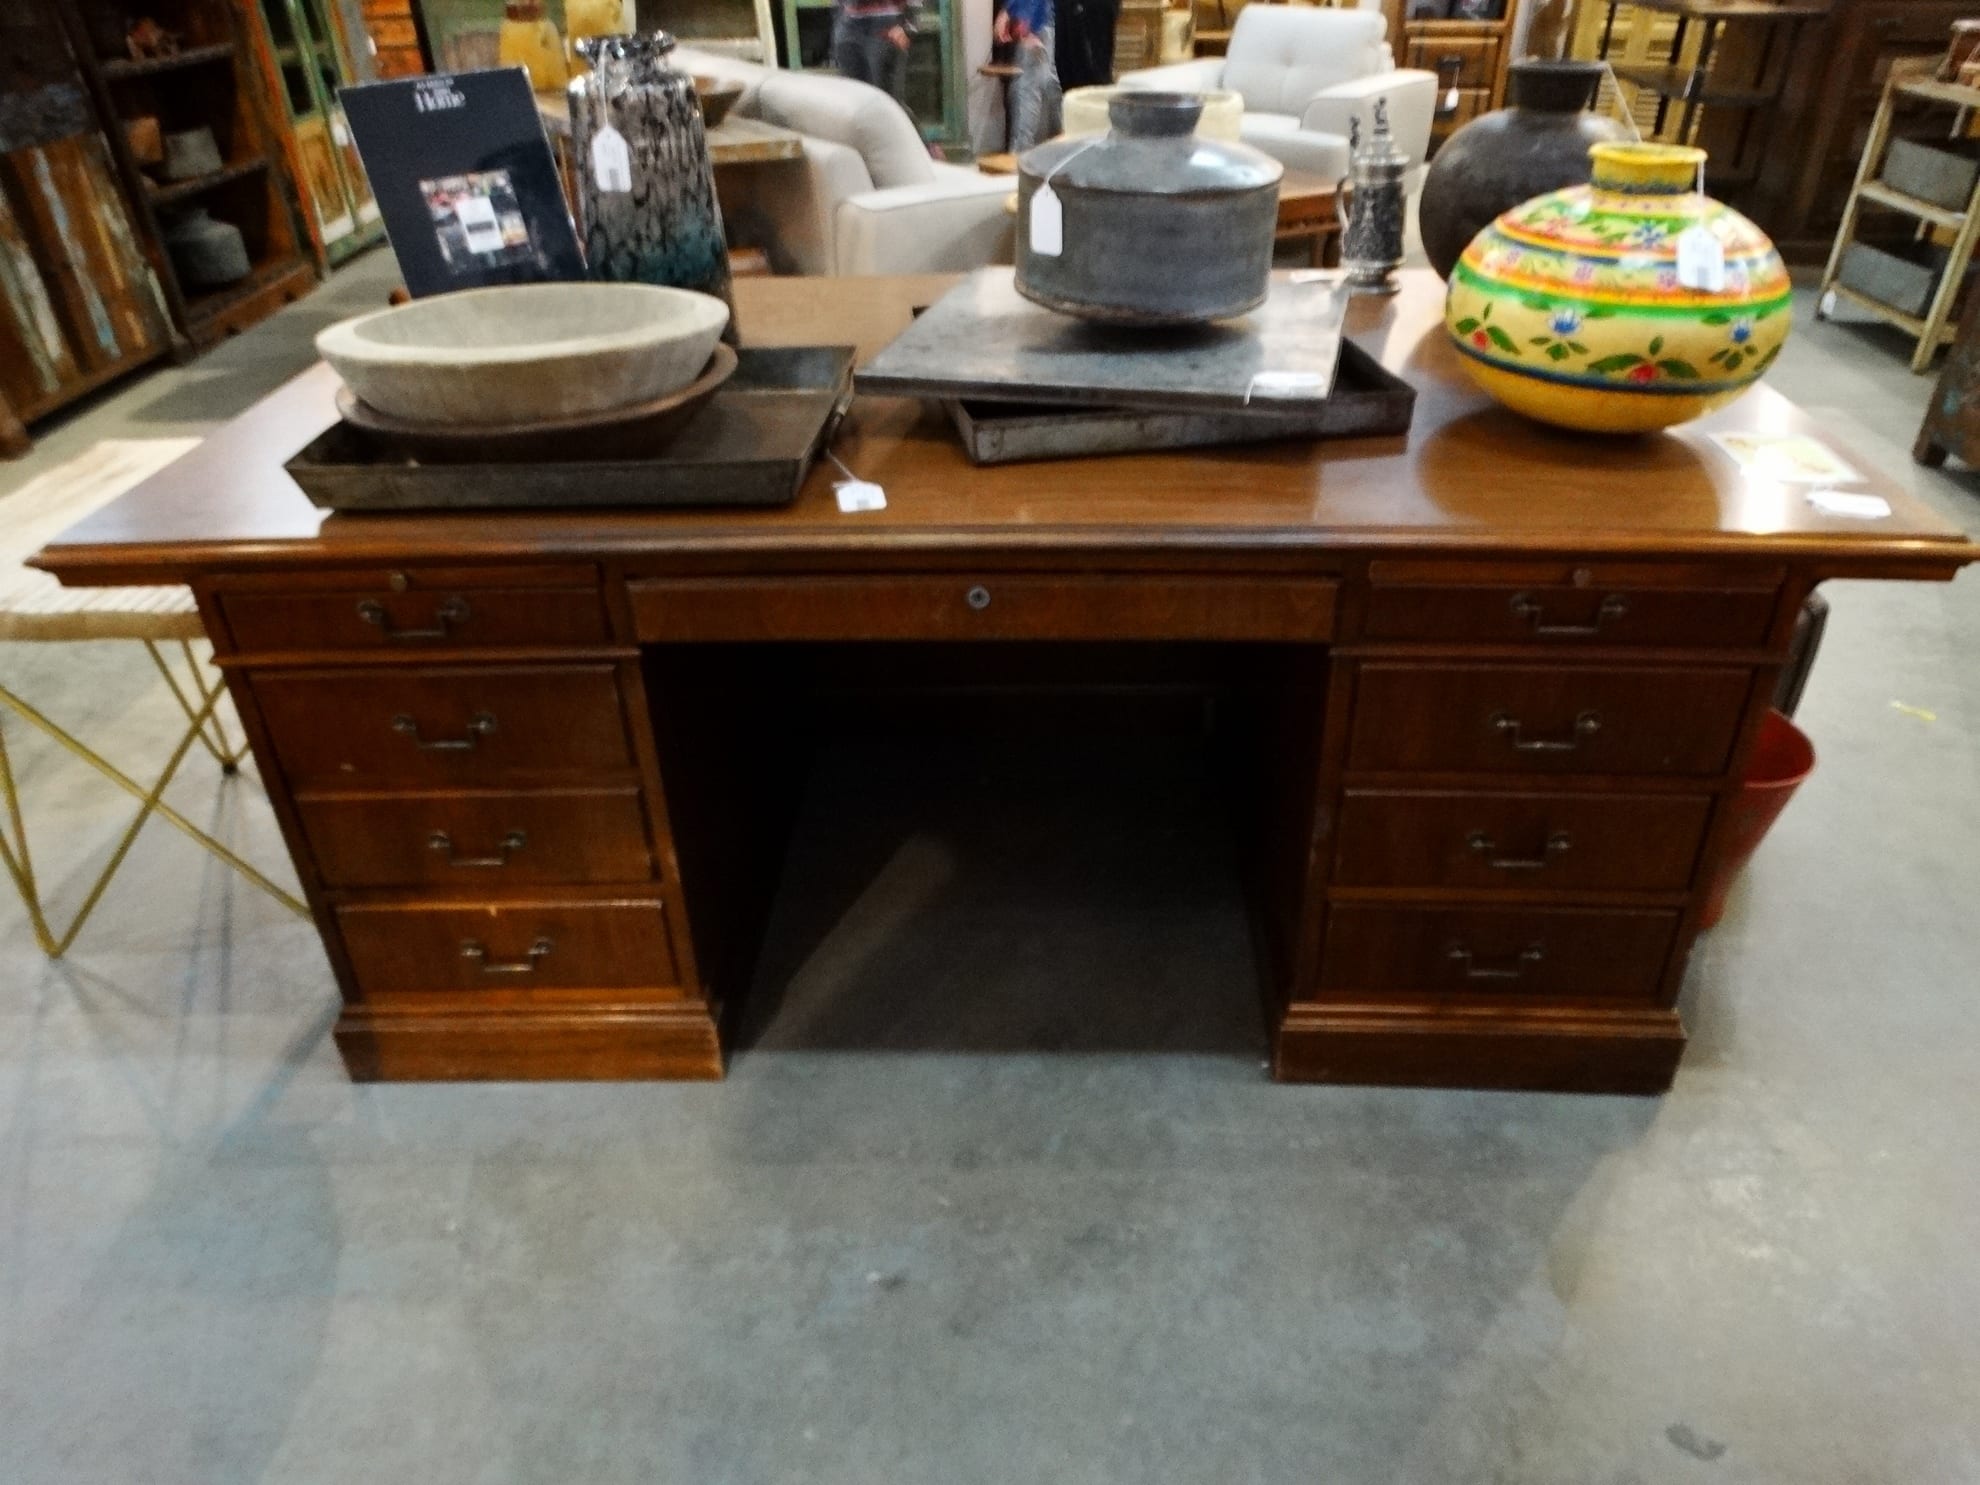 Antique Study Desk for Sale, Retro Office Furniture for Sale